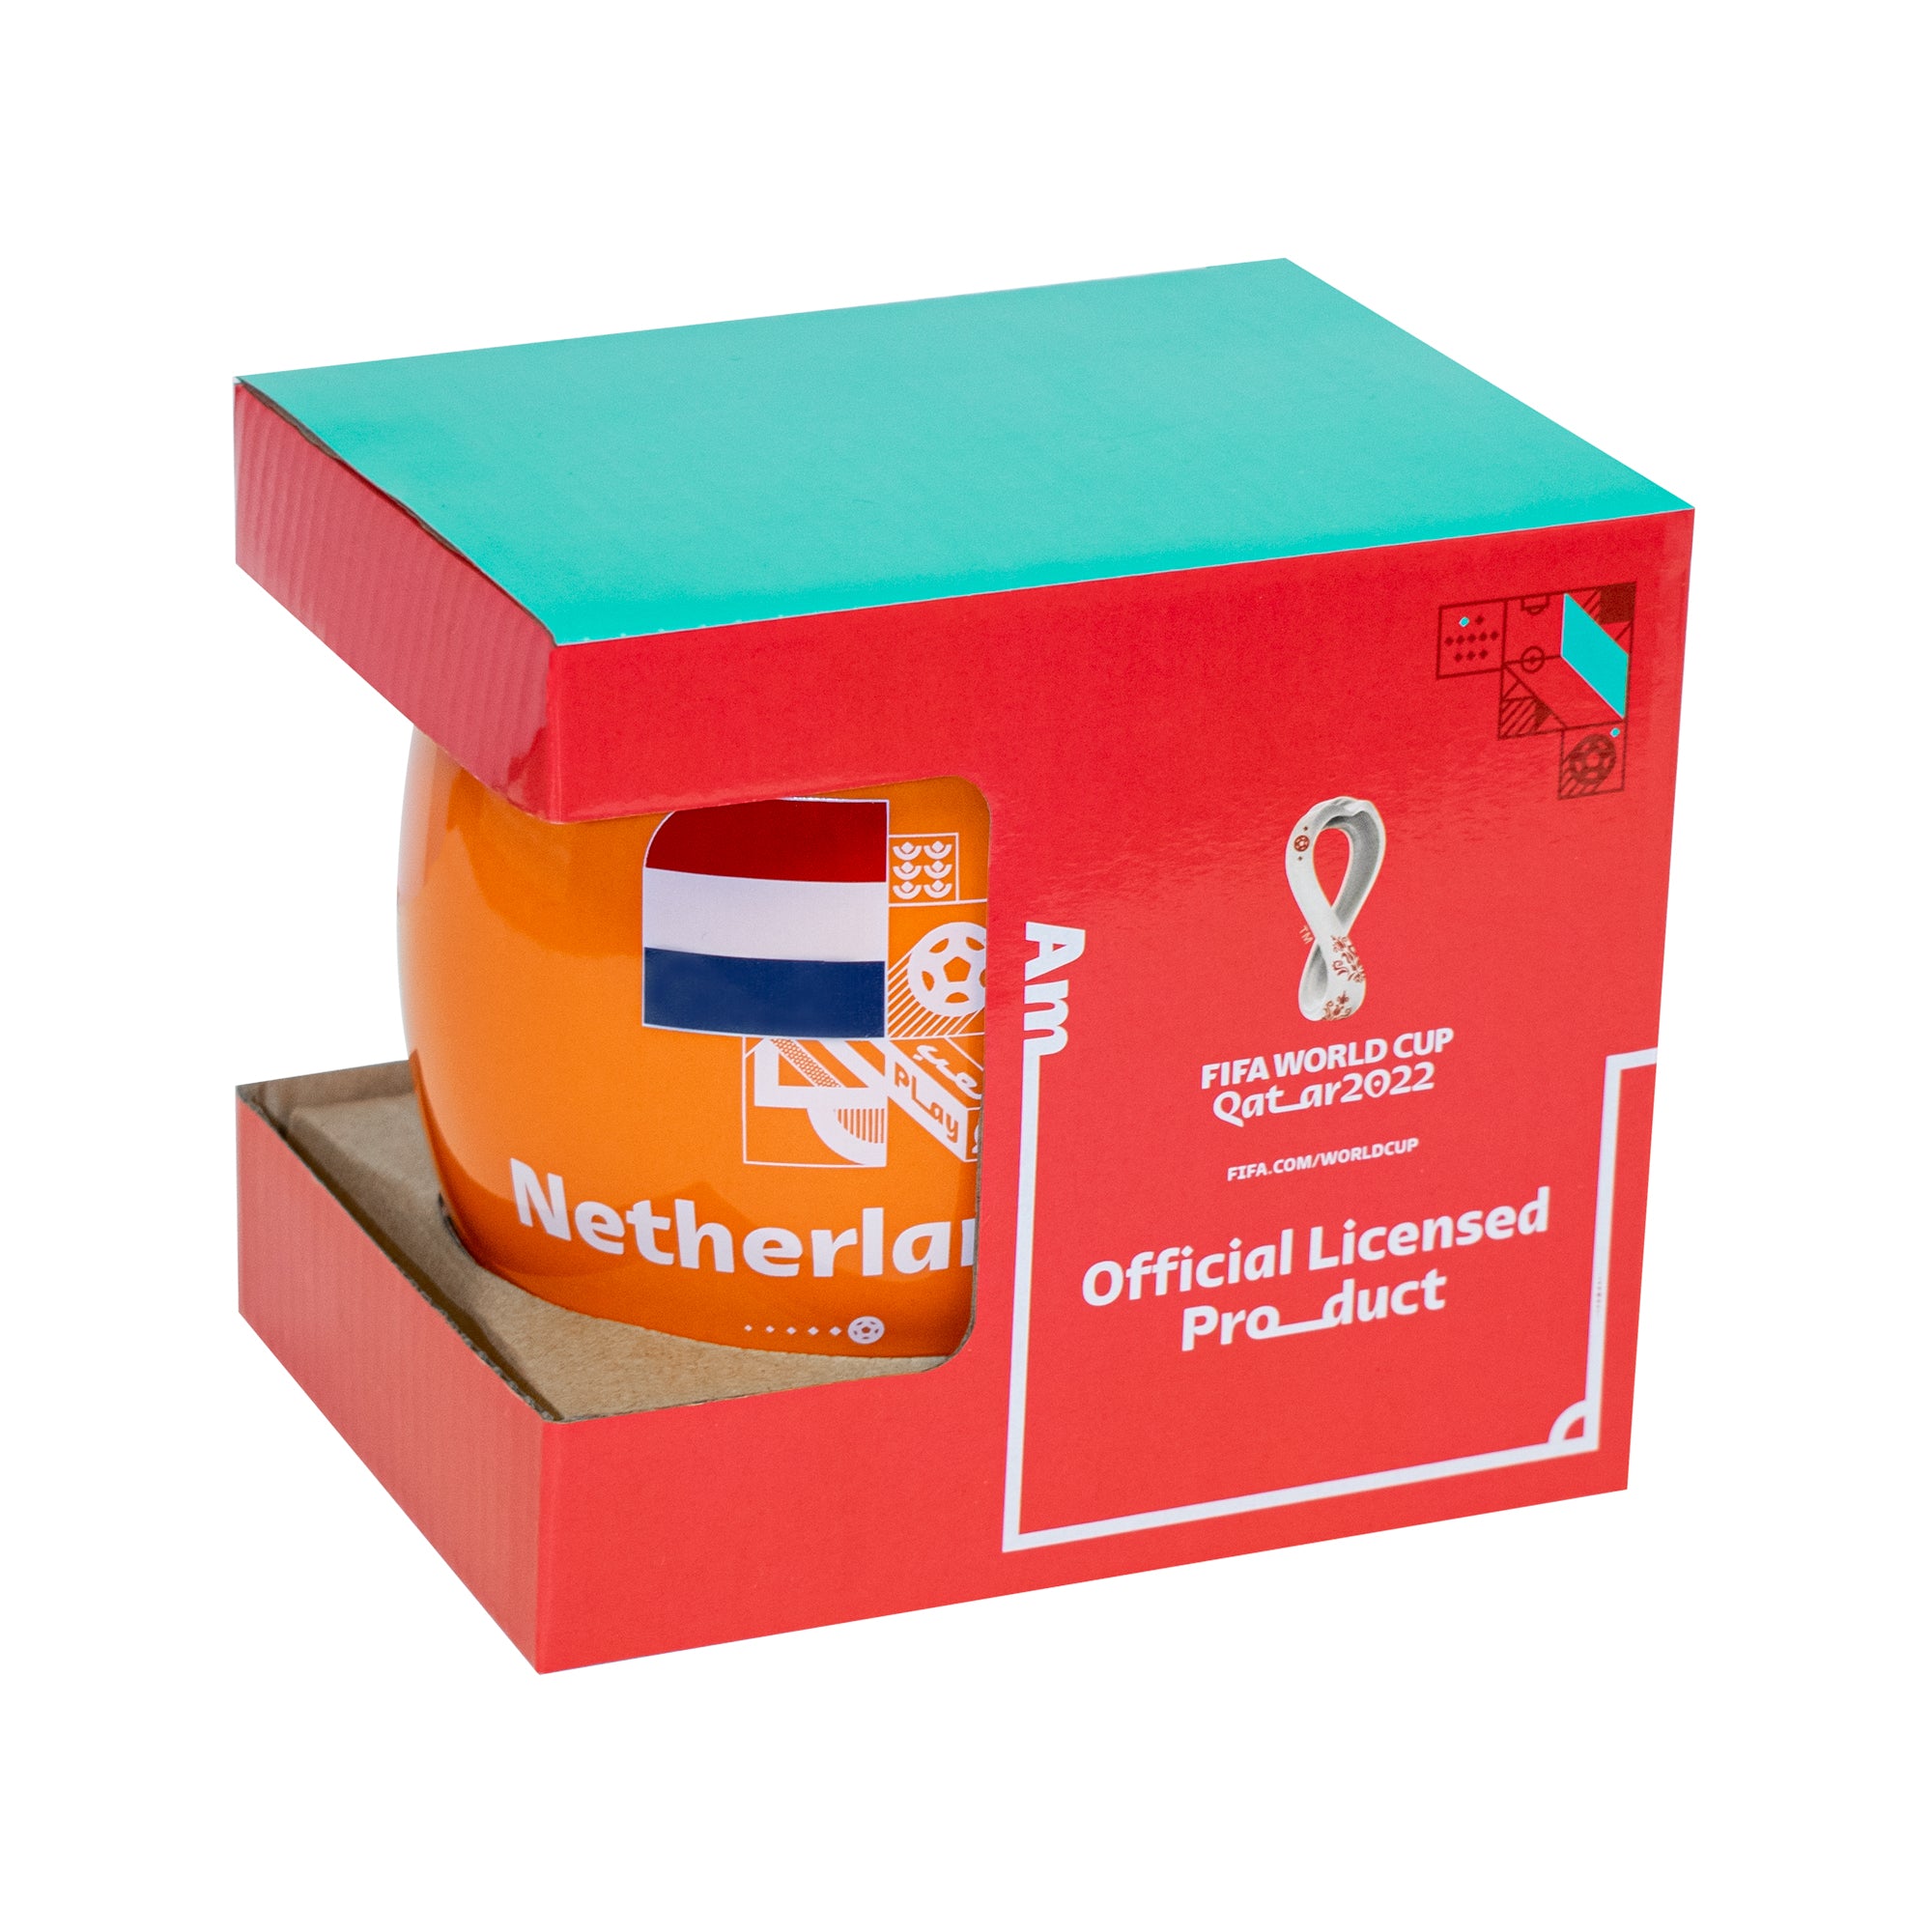 mug-netherlands-box-front-worldcup-productimage.jpg